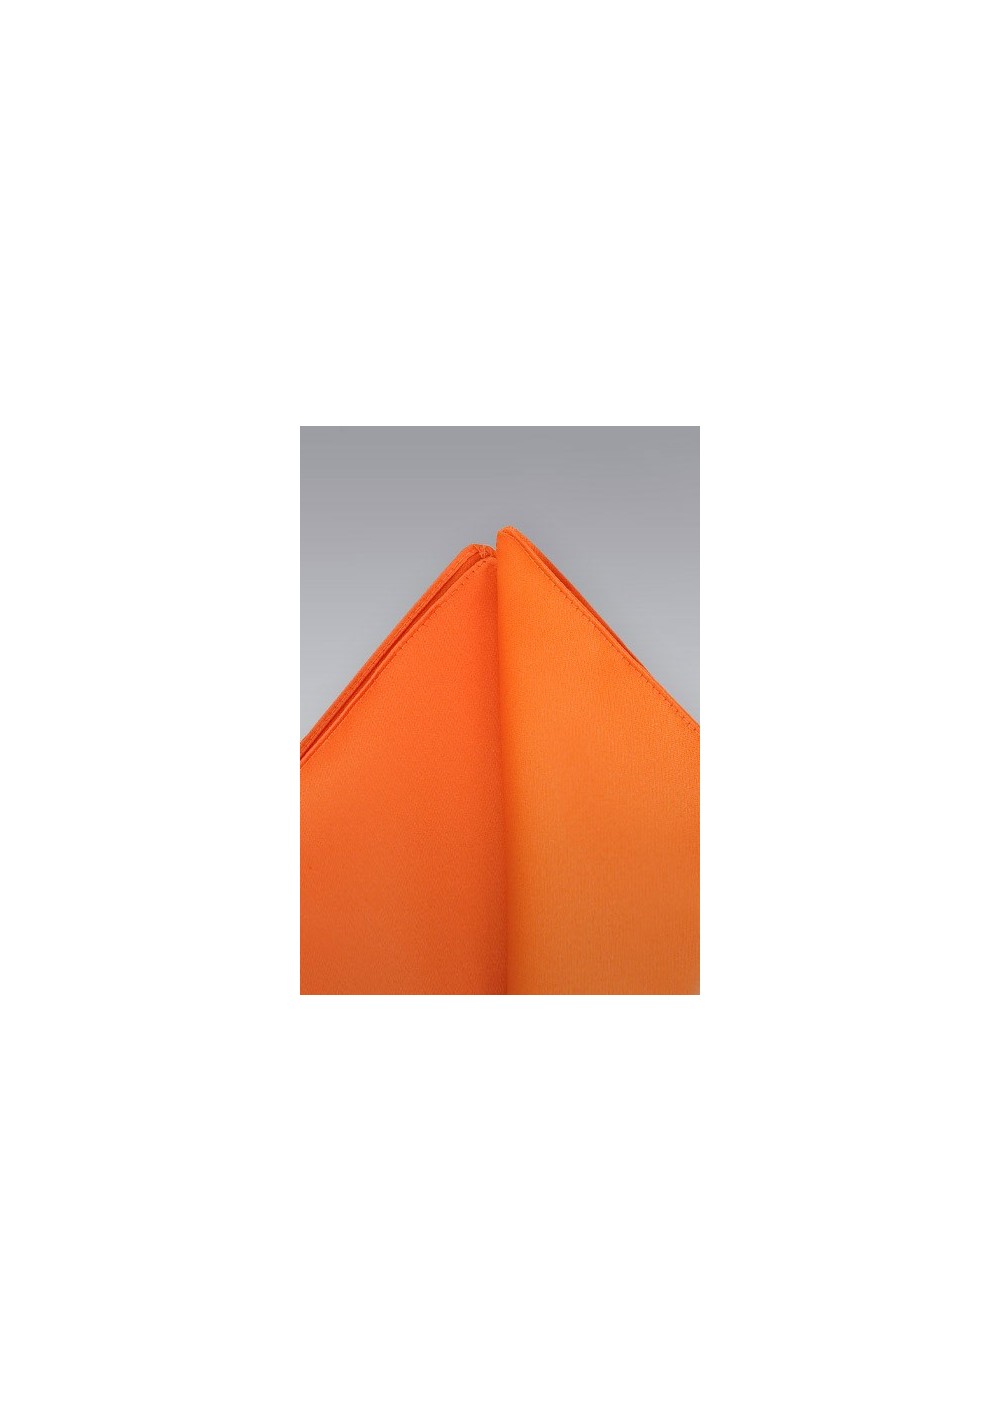 Pocket squares - Bright orange pocket square